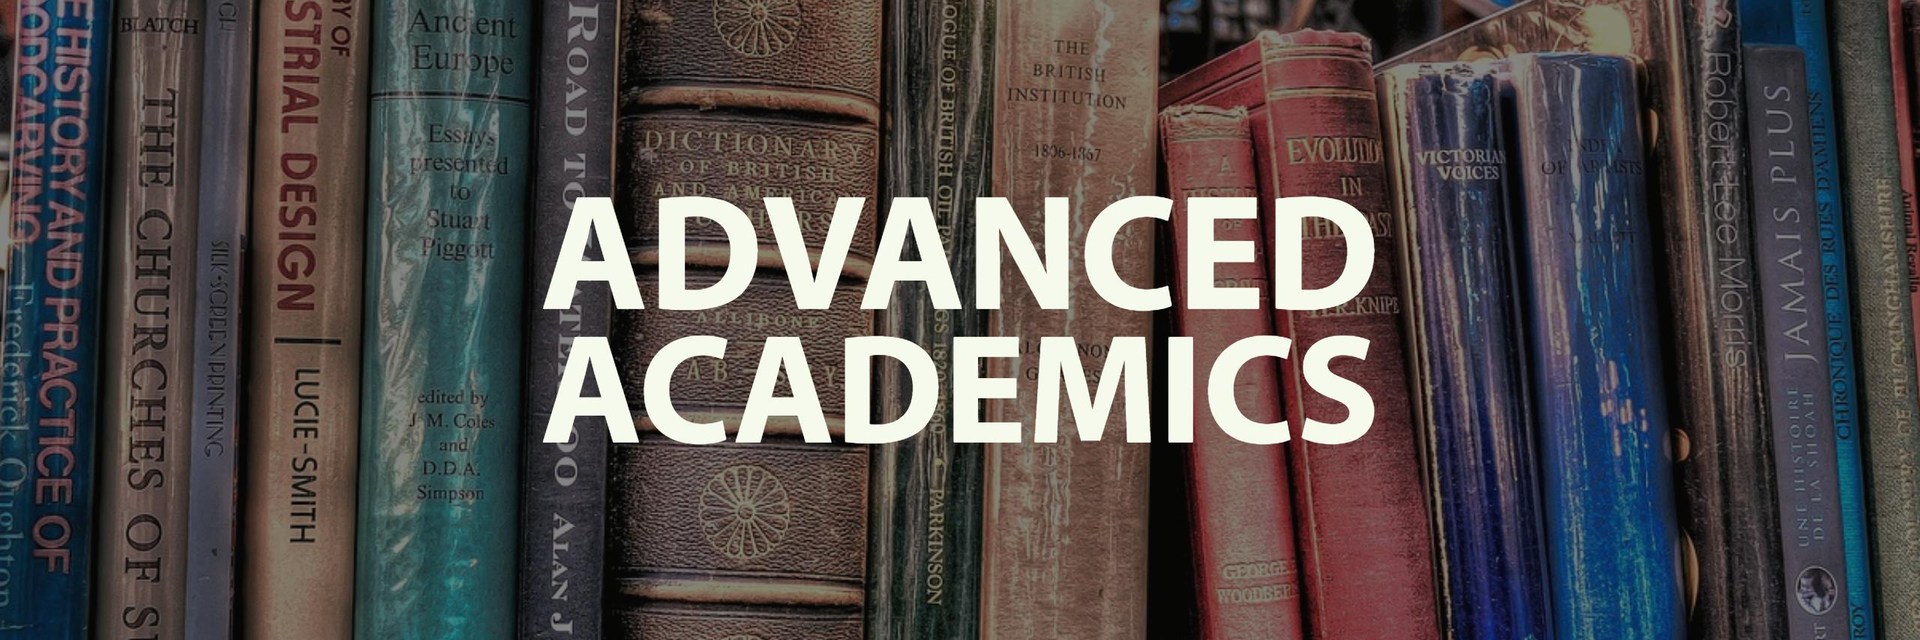 Advanced Academics